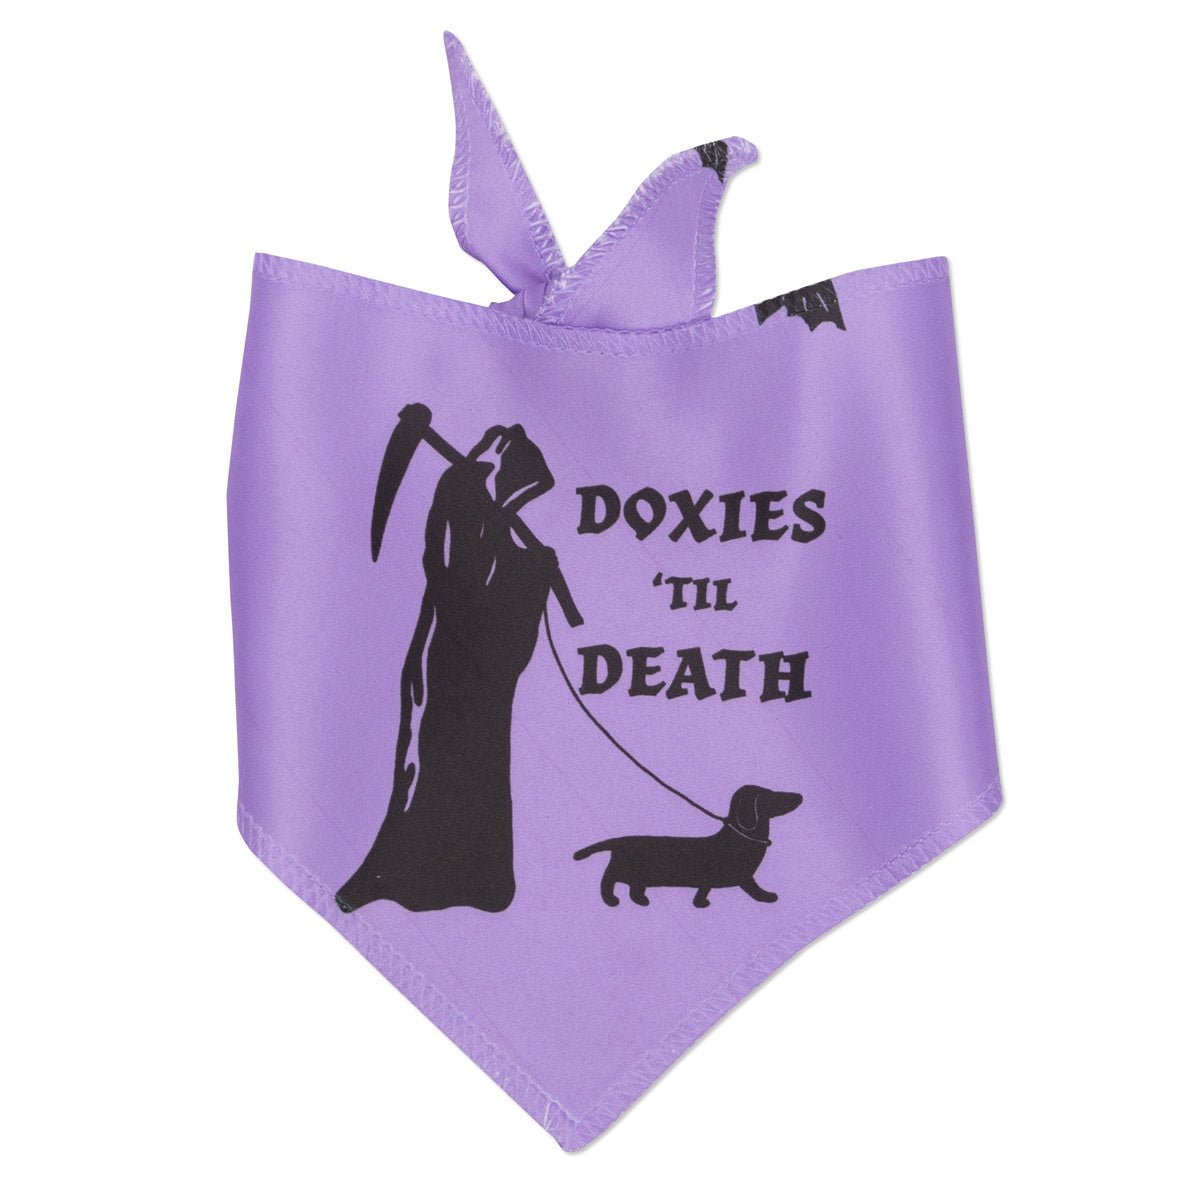 doxies 'til death dog bandana - bean goods